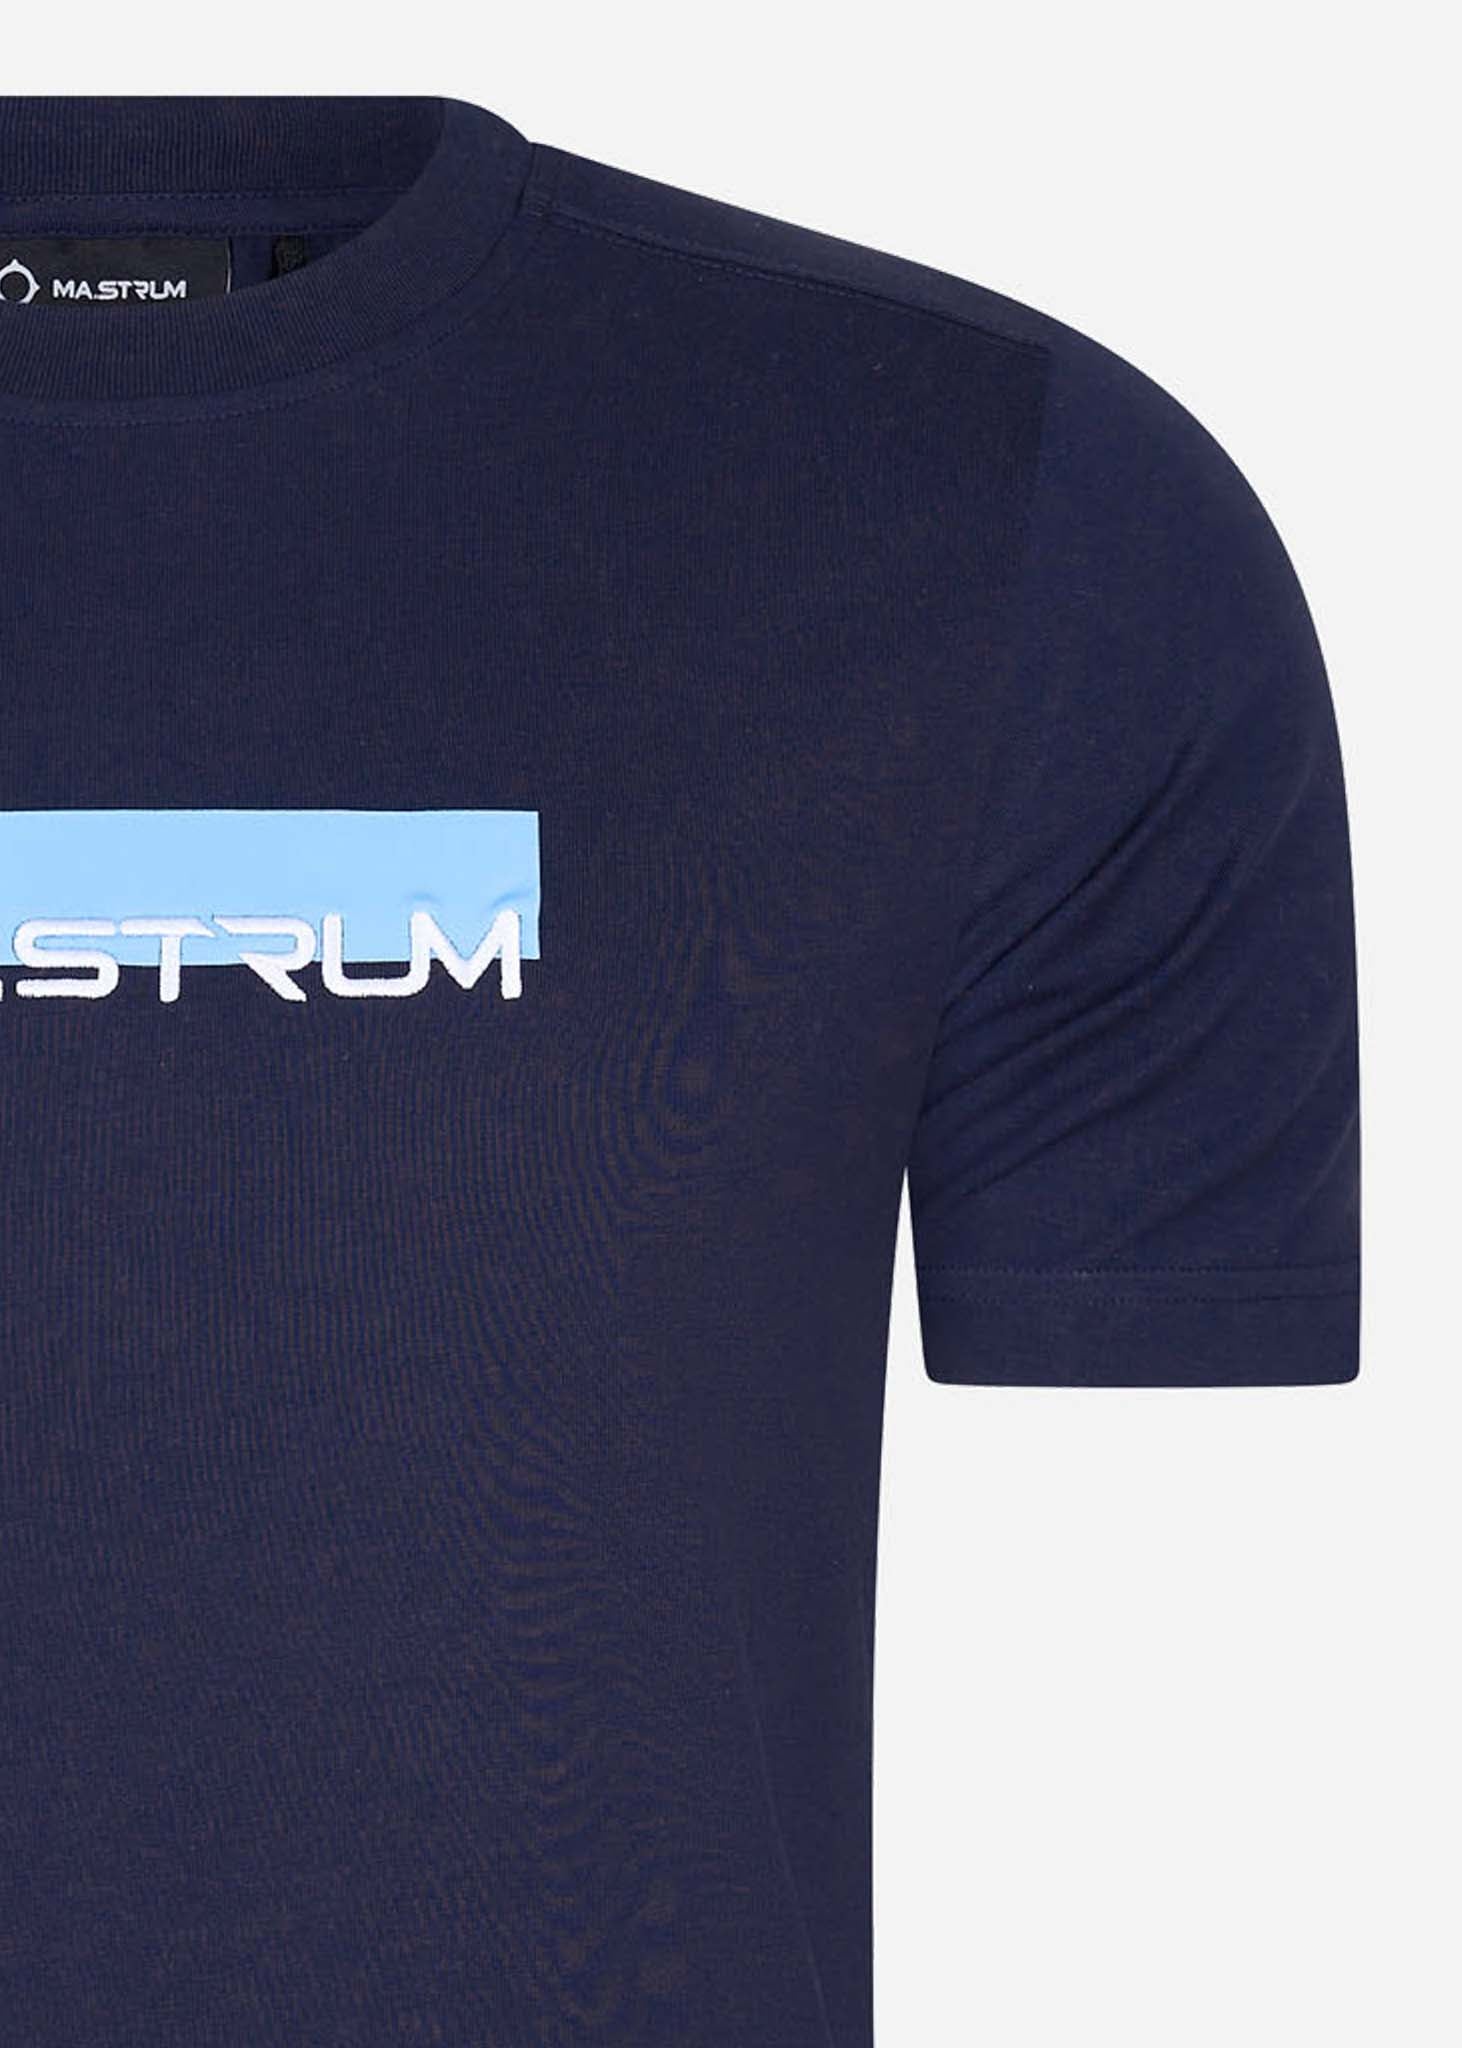 MA.Strum T-shirts  MA.Strum block print tee - ink navy 